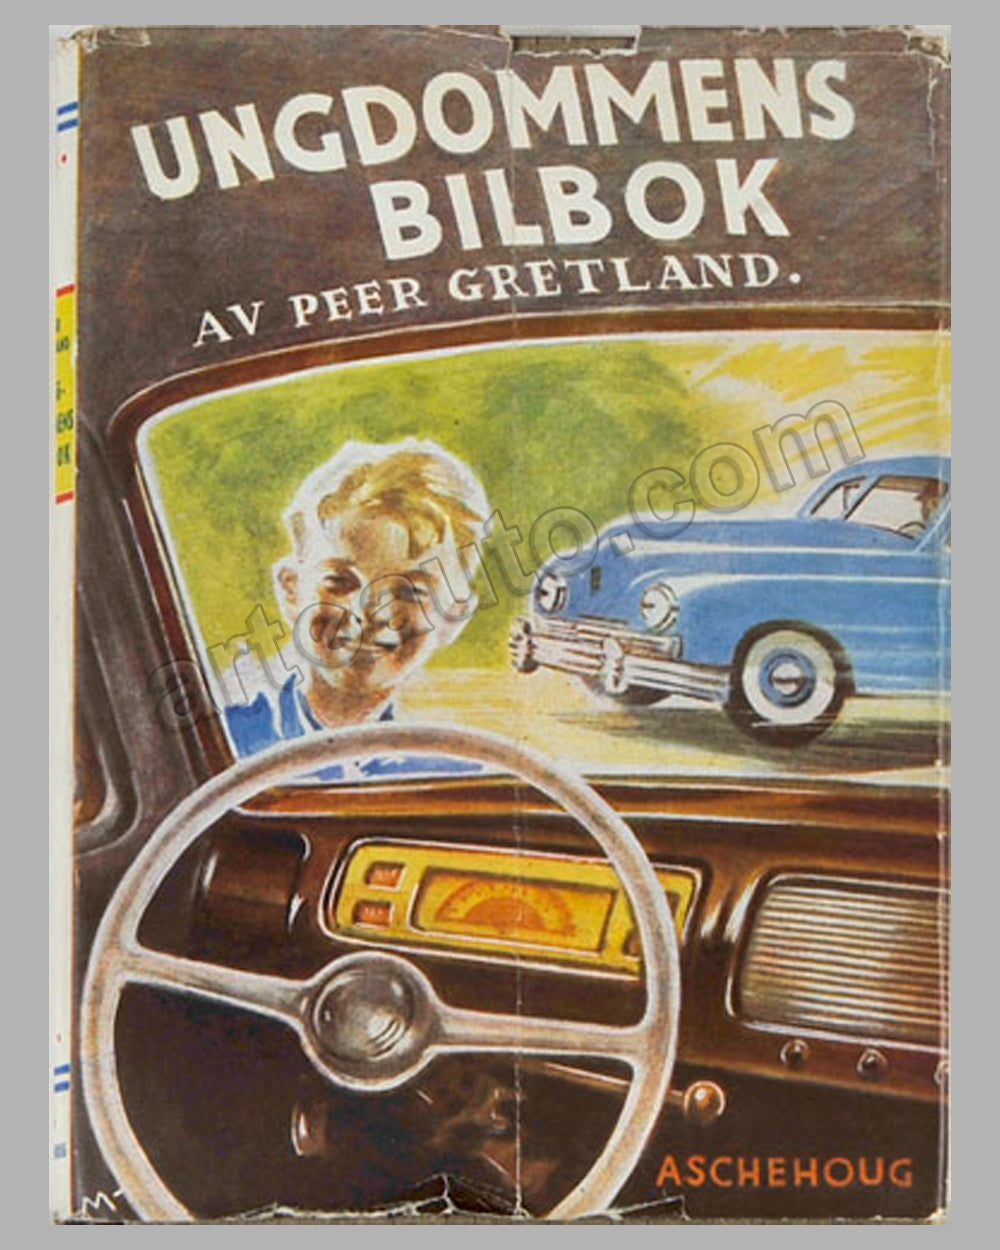 Ungdommens Bilbok book by P. Gretland, 1st ed., 1949